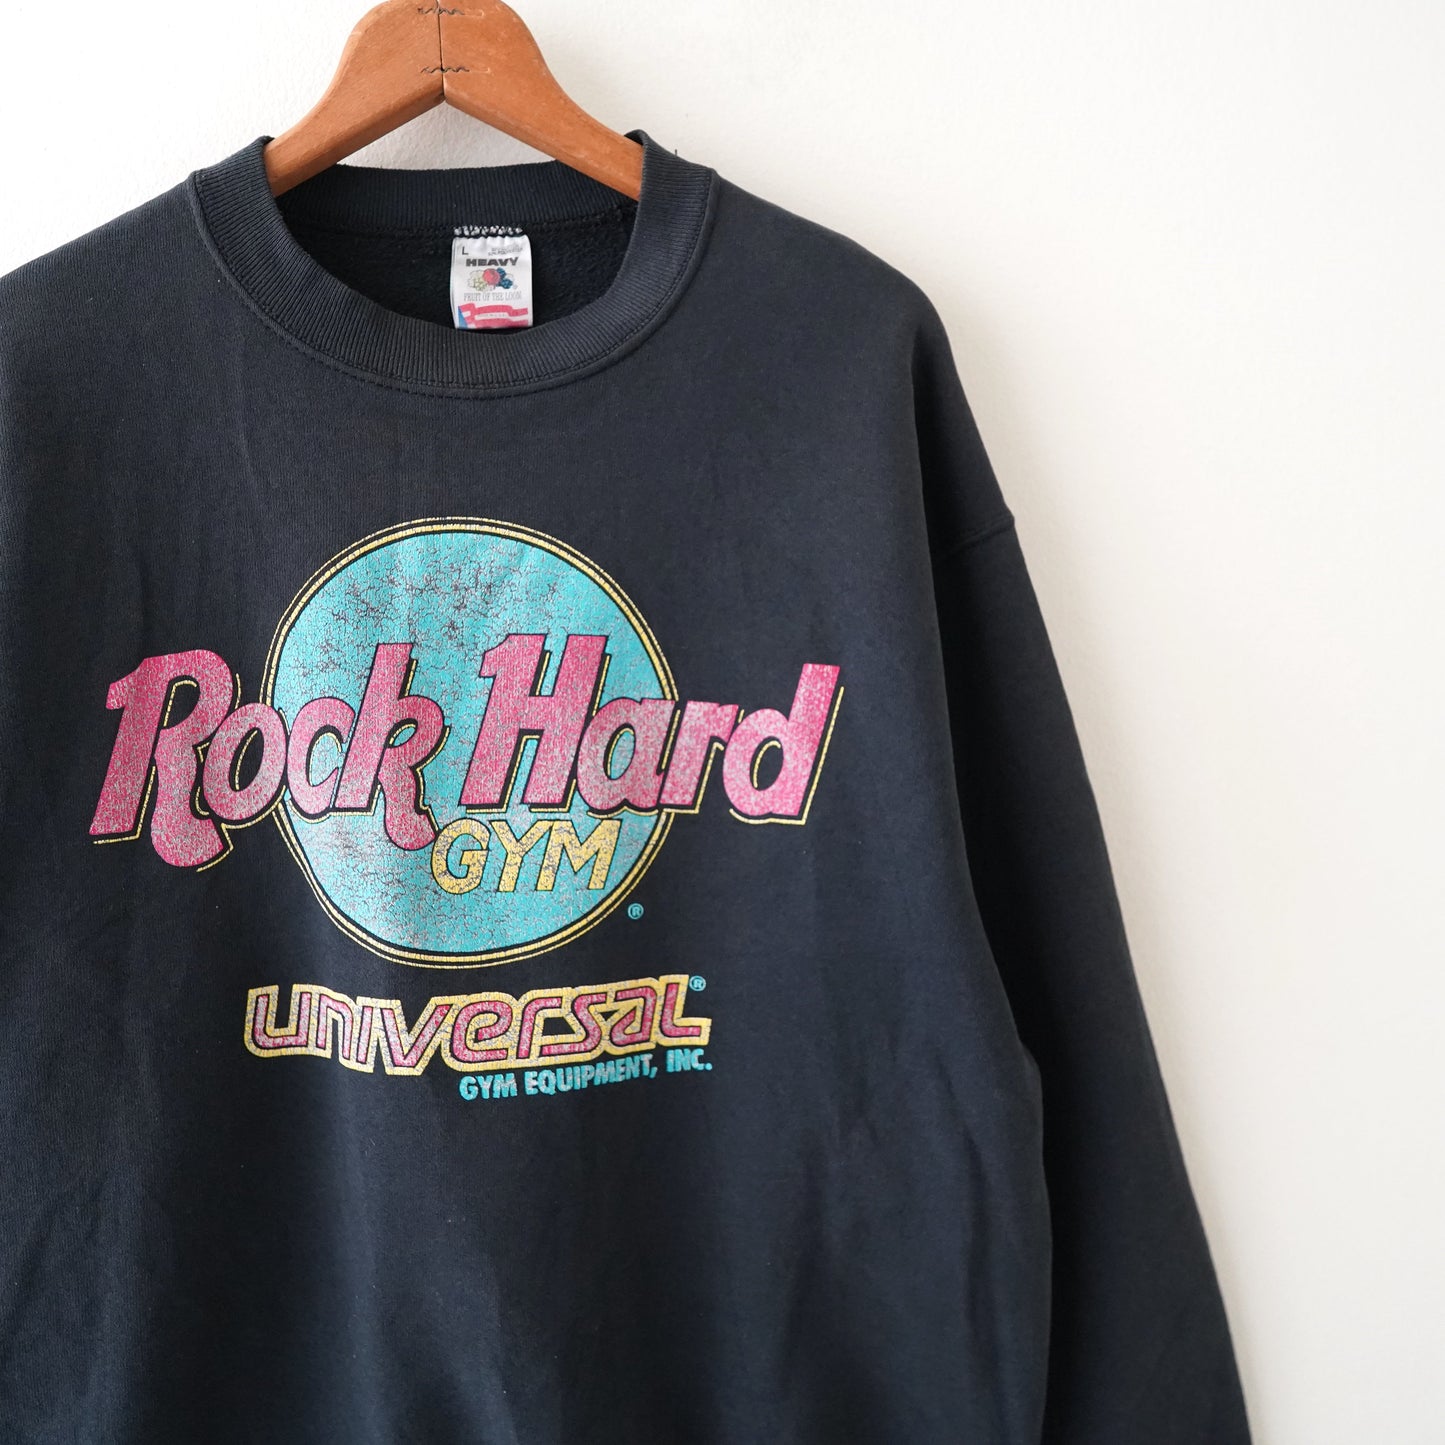 90s Rock Hard GYM sweat